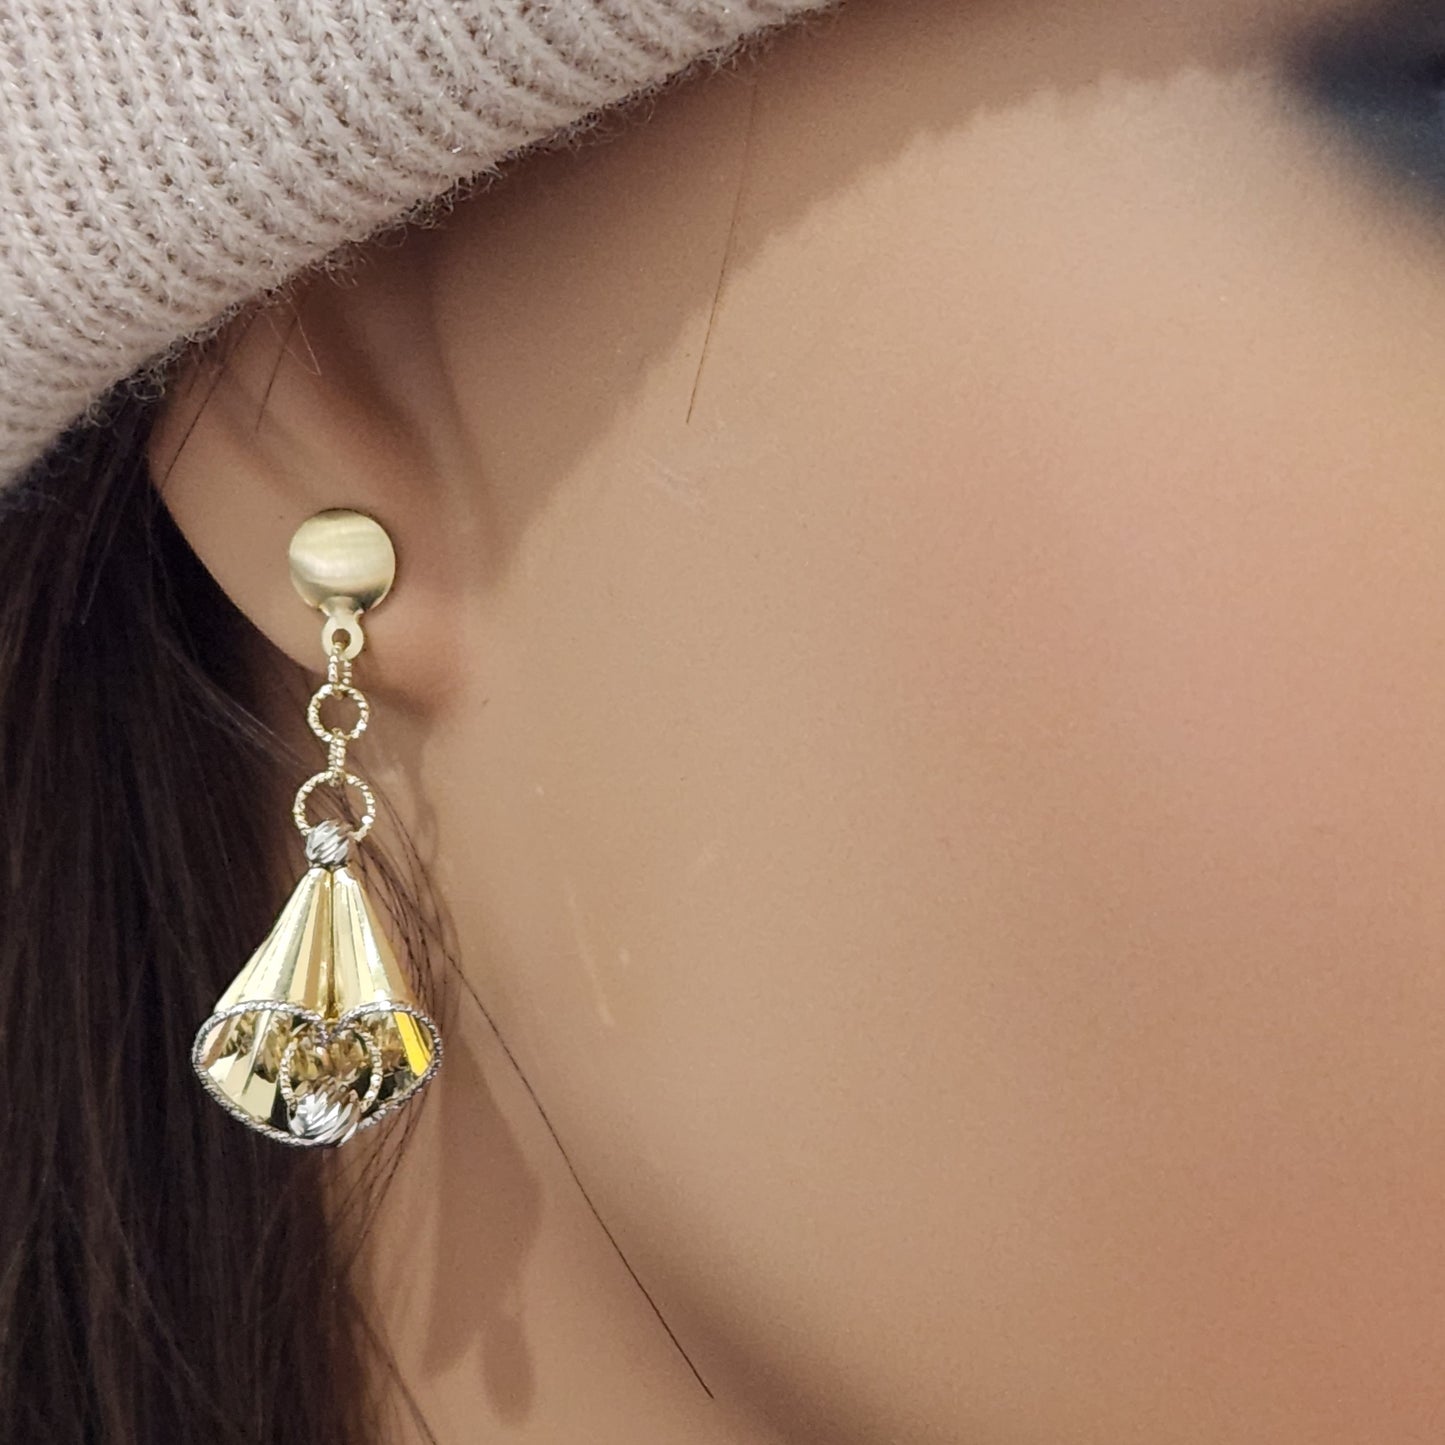 14K Gold Dangling Wrap Around Shape Diamond Cut  Earrings